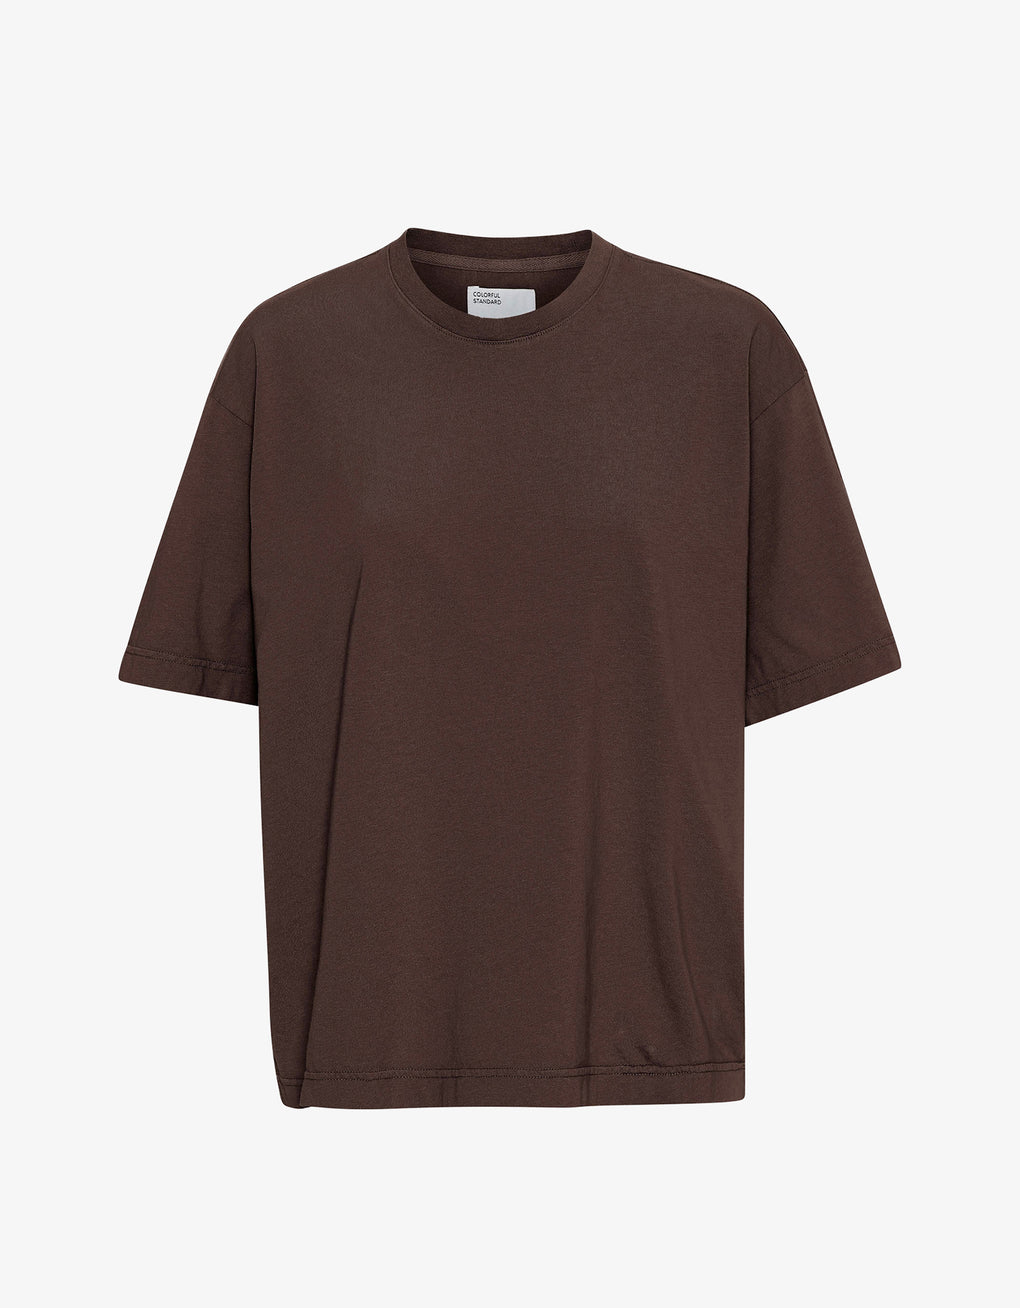 Oversized organic T-Shirt in coffee brown